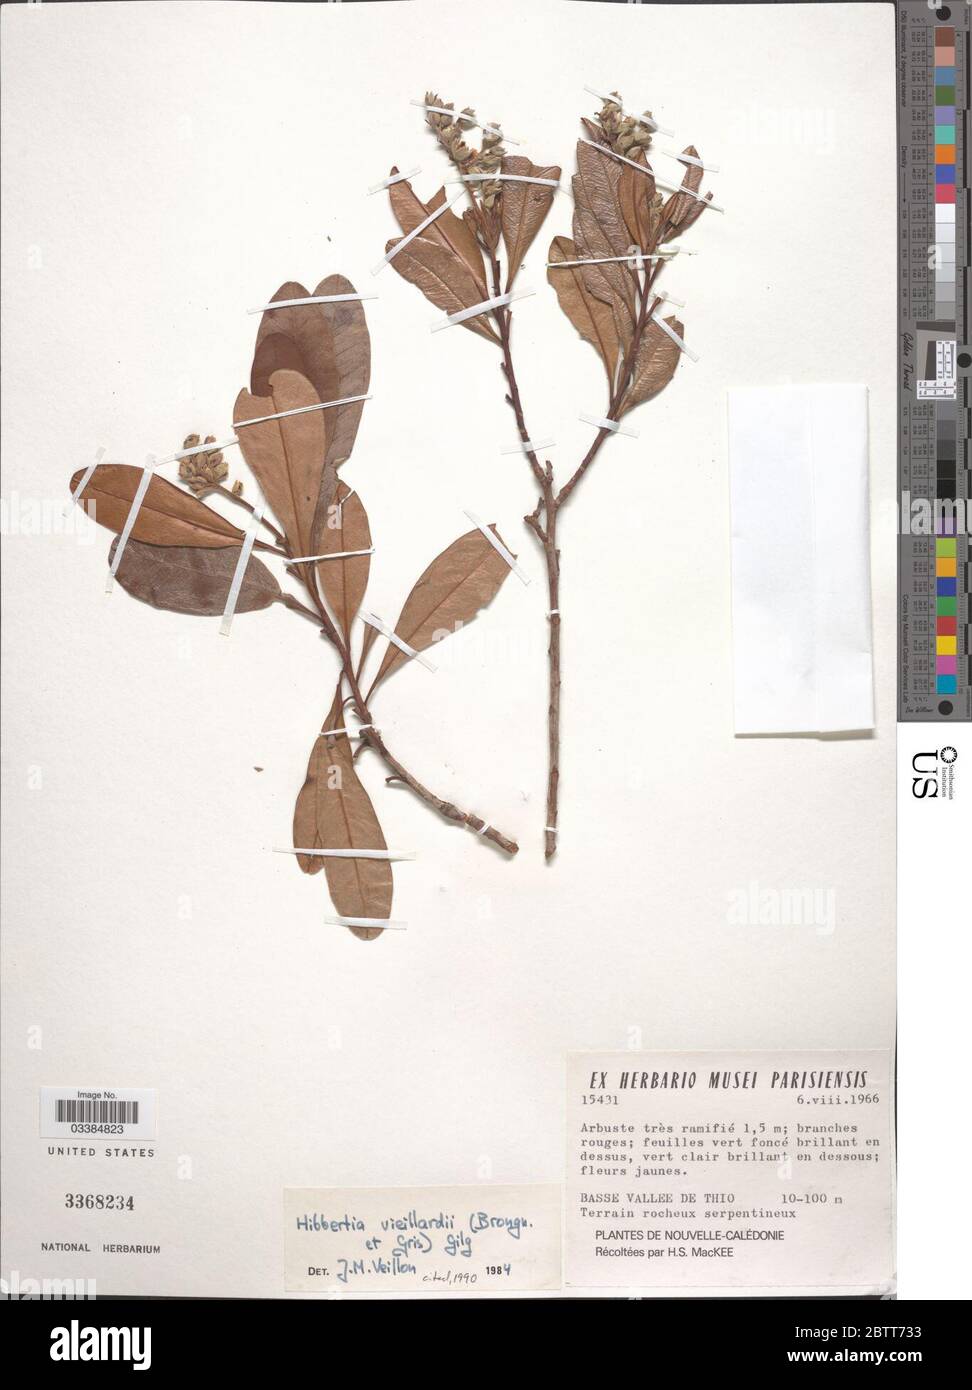 Hibbertia vieillardii Gilg. Stock Photo